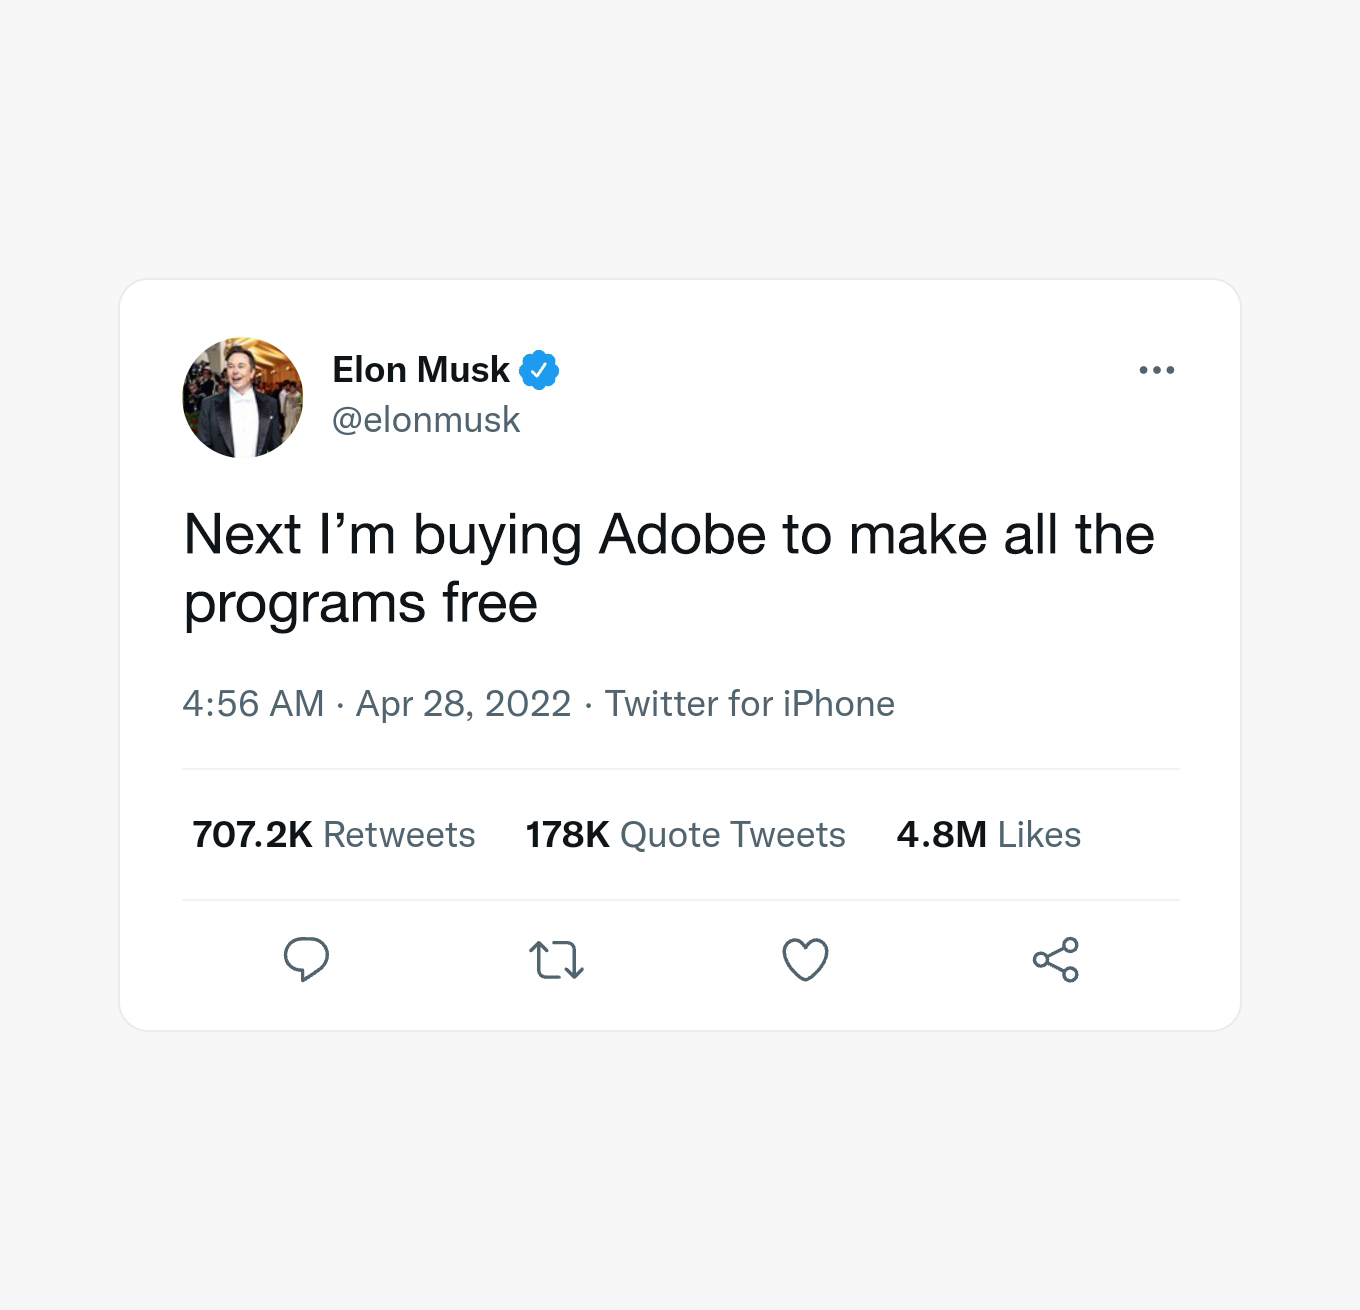 Elon Musk: Next I'm buying Adobe to make all the programs free